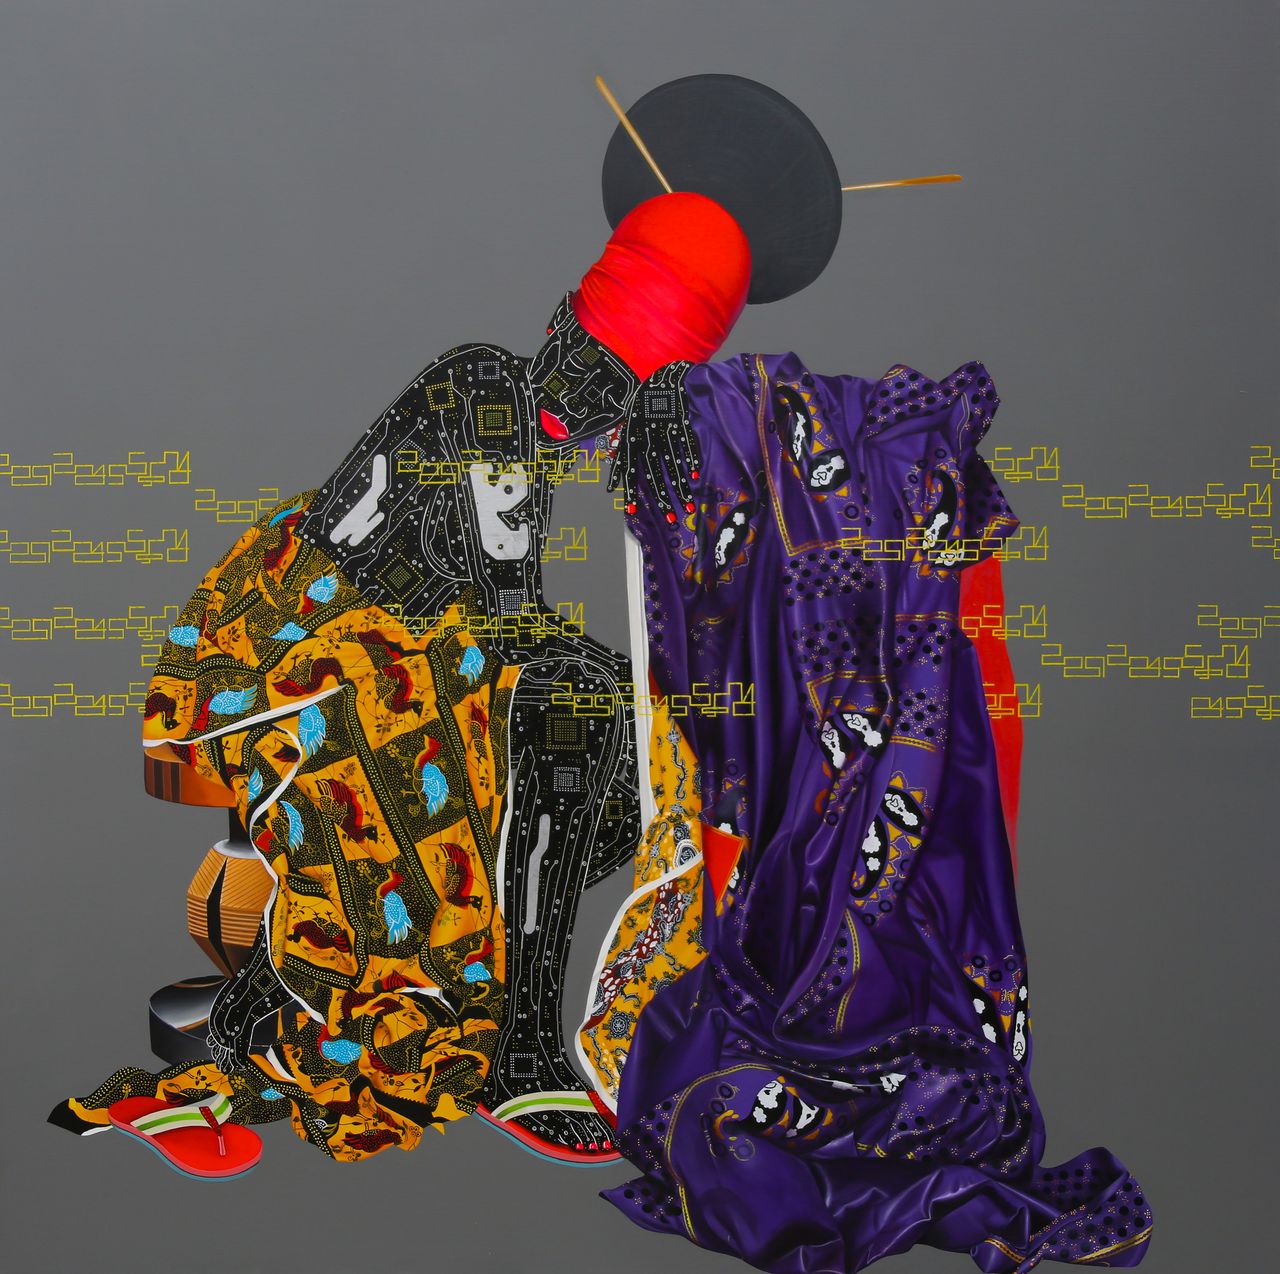 Abandonn¬s, Eddy Kamuanga Ilunga, 2015, Acrylic and oil on canvas, 200 x 200 cm